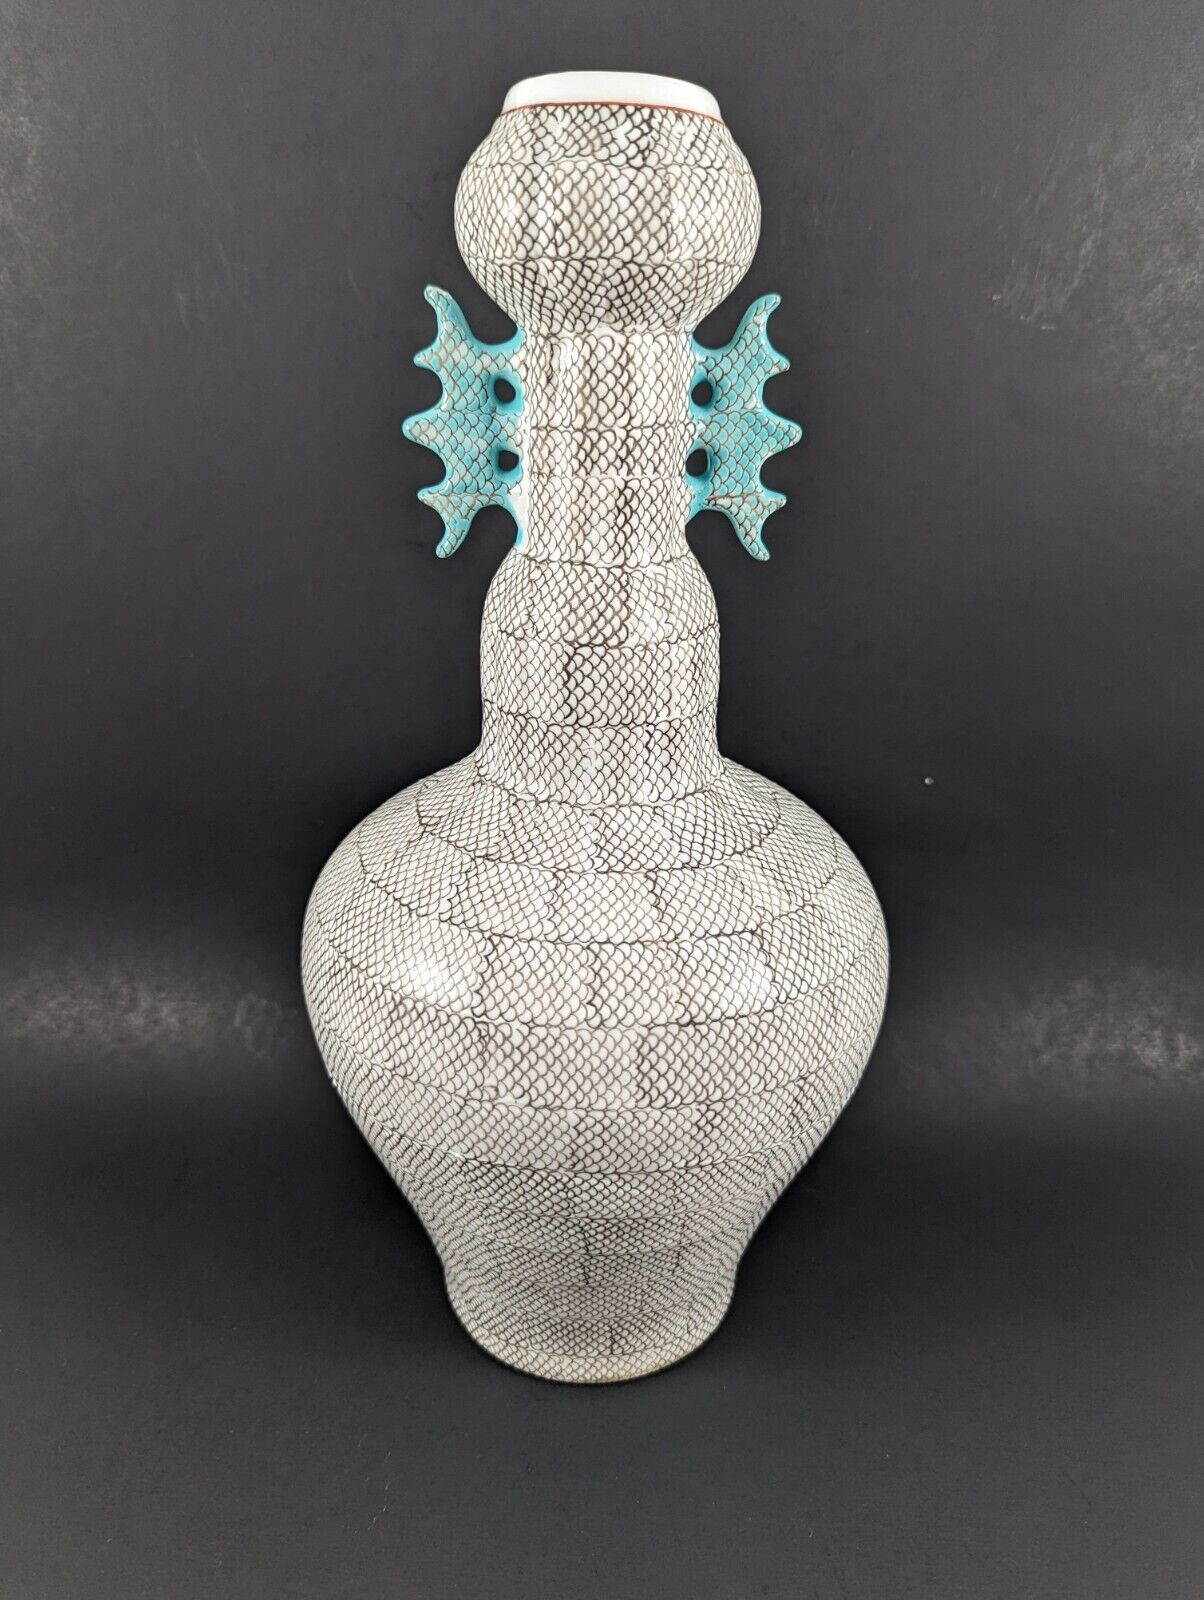 Vintage Dragon Scale Handmade Chinese Porcelain Vase w/Teal Wing Handles 13